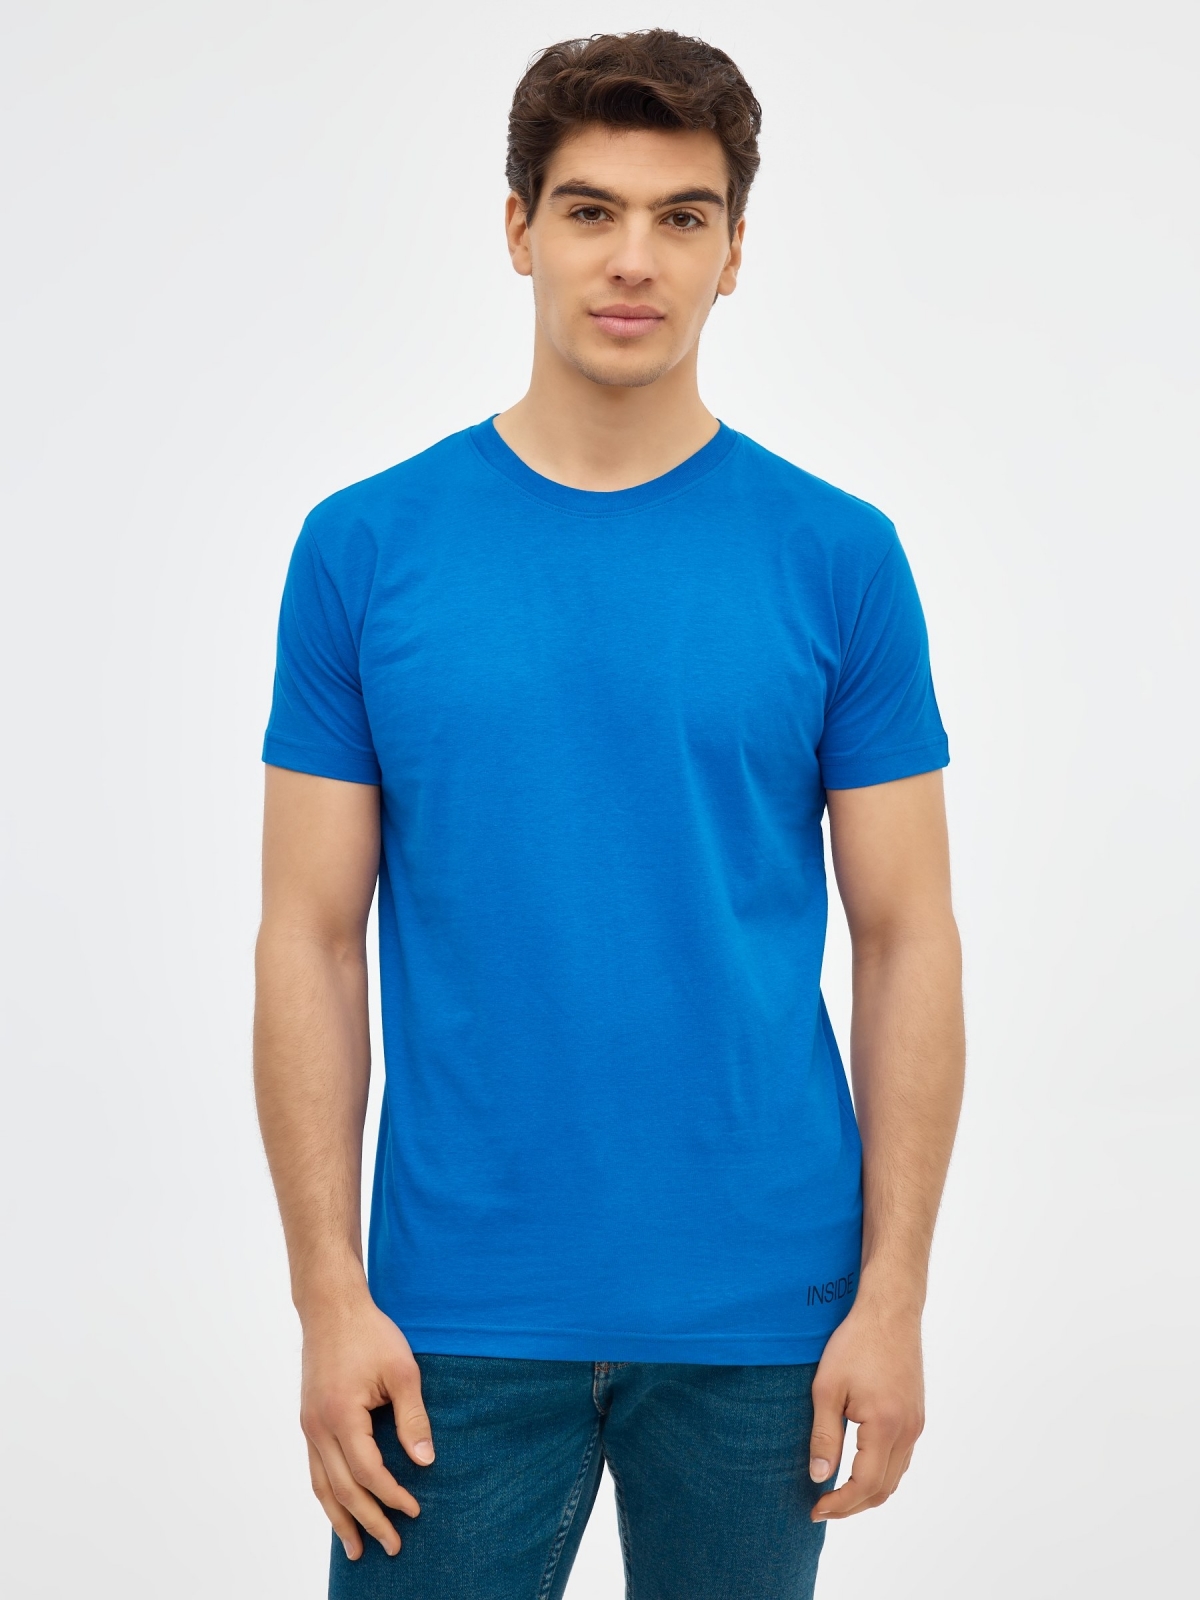 Camiseta básica manga corta azul ducados vista media frontal